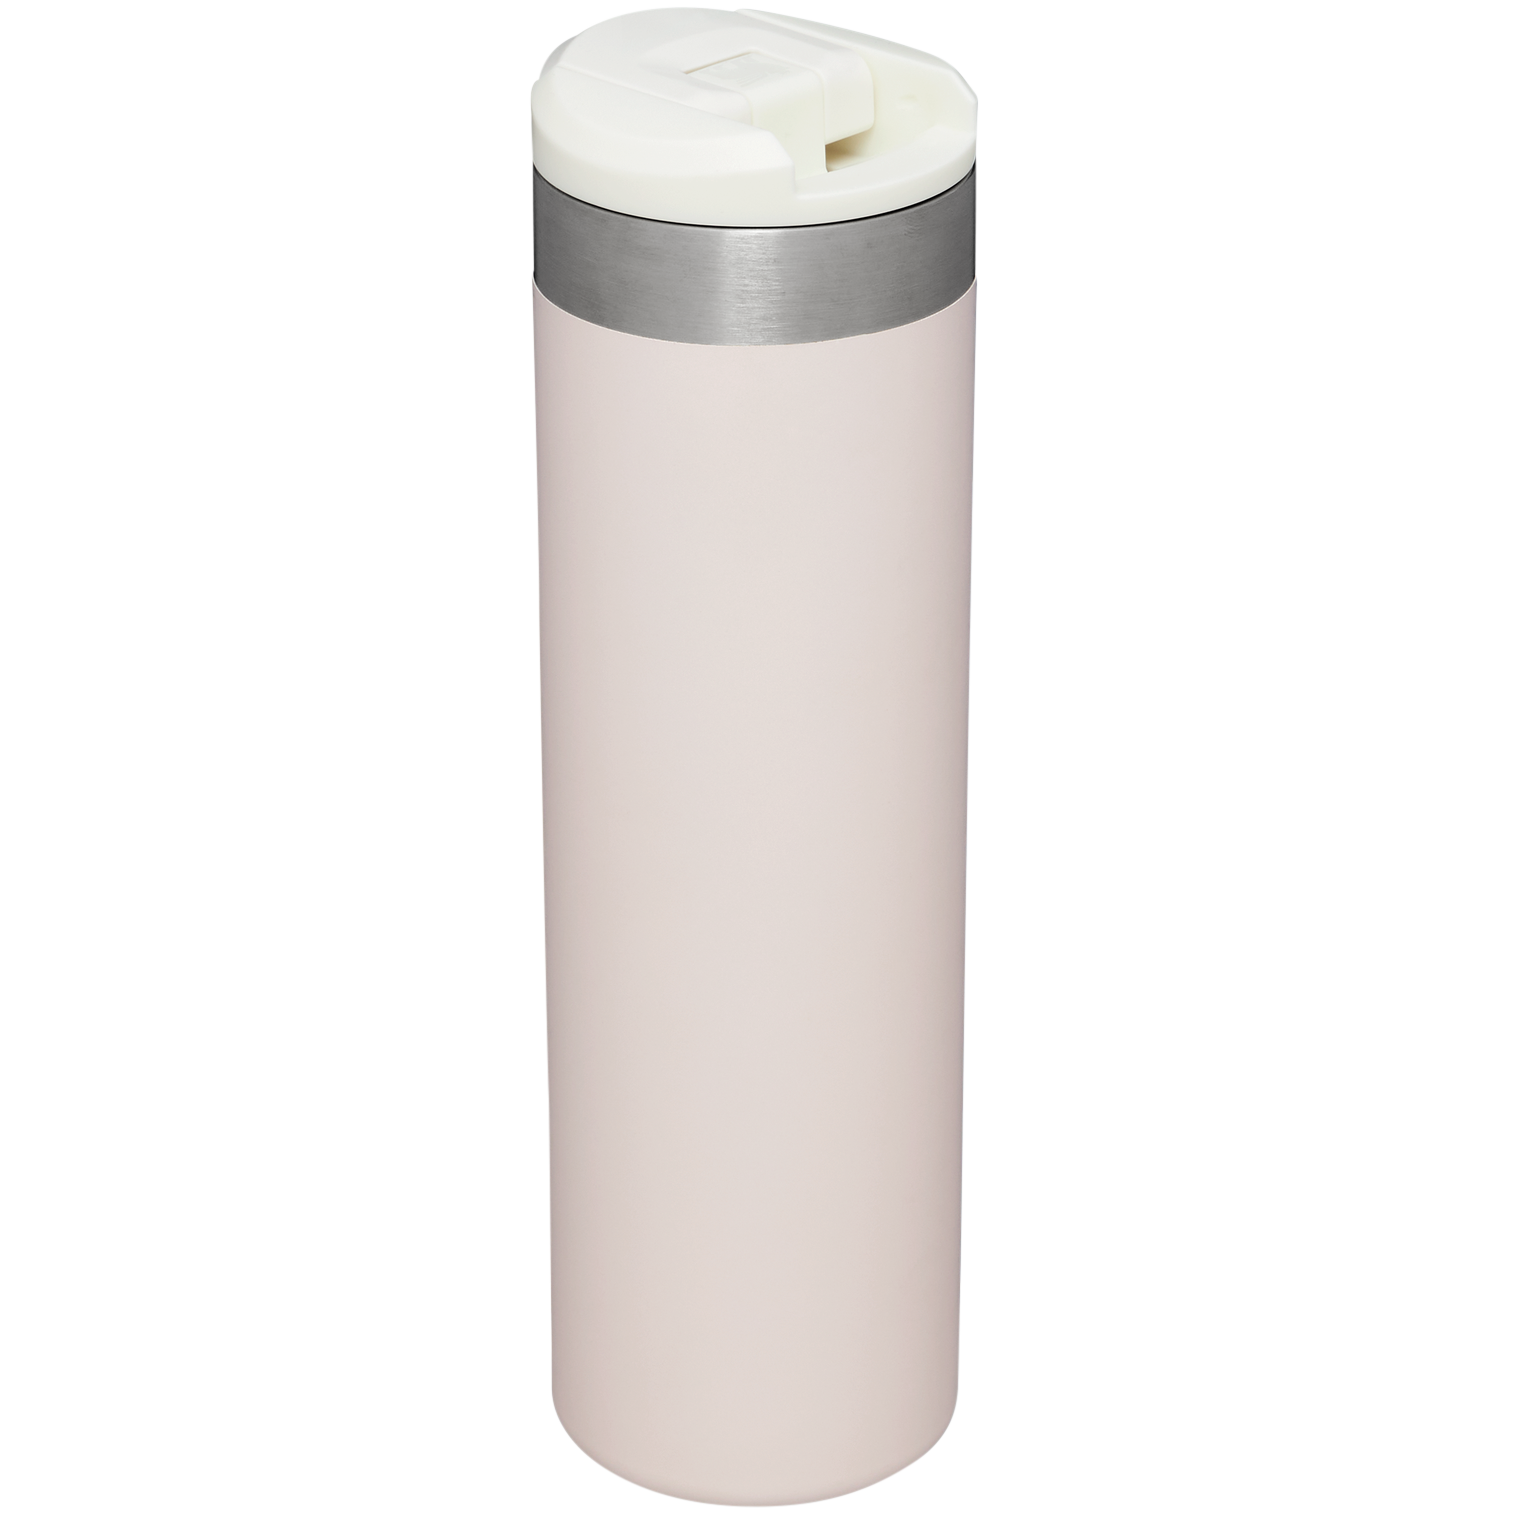 The AeroLight™ Transit Bottle 16 oz - rose quartz glimmer